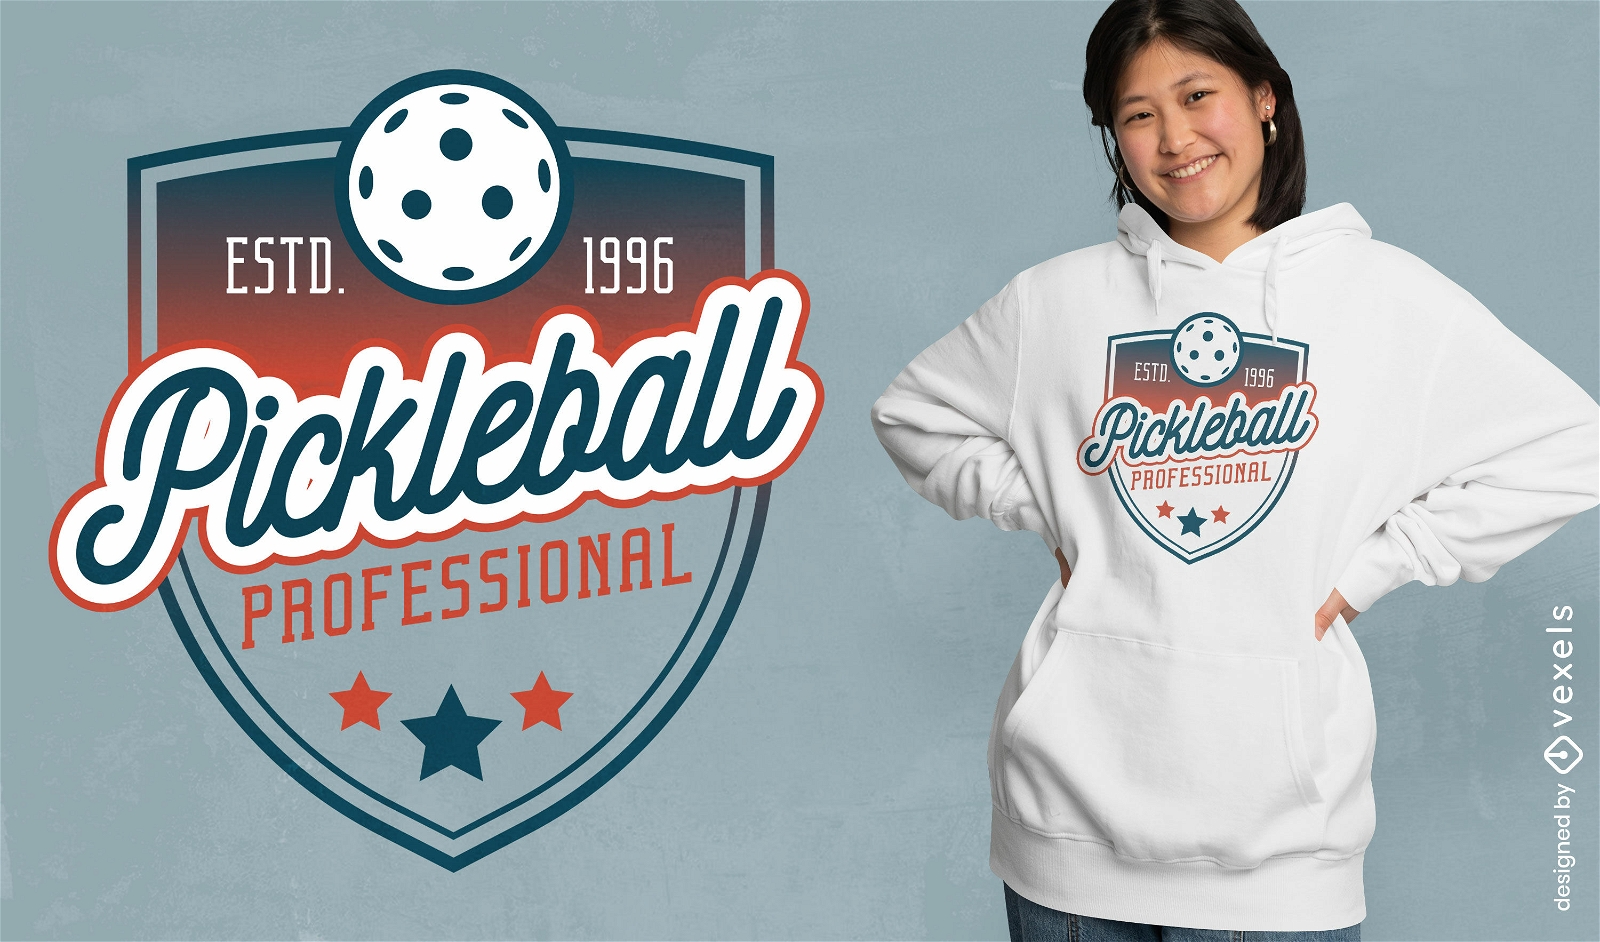 Diseño de camiseta profesional de Pickball.